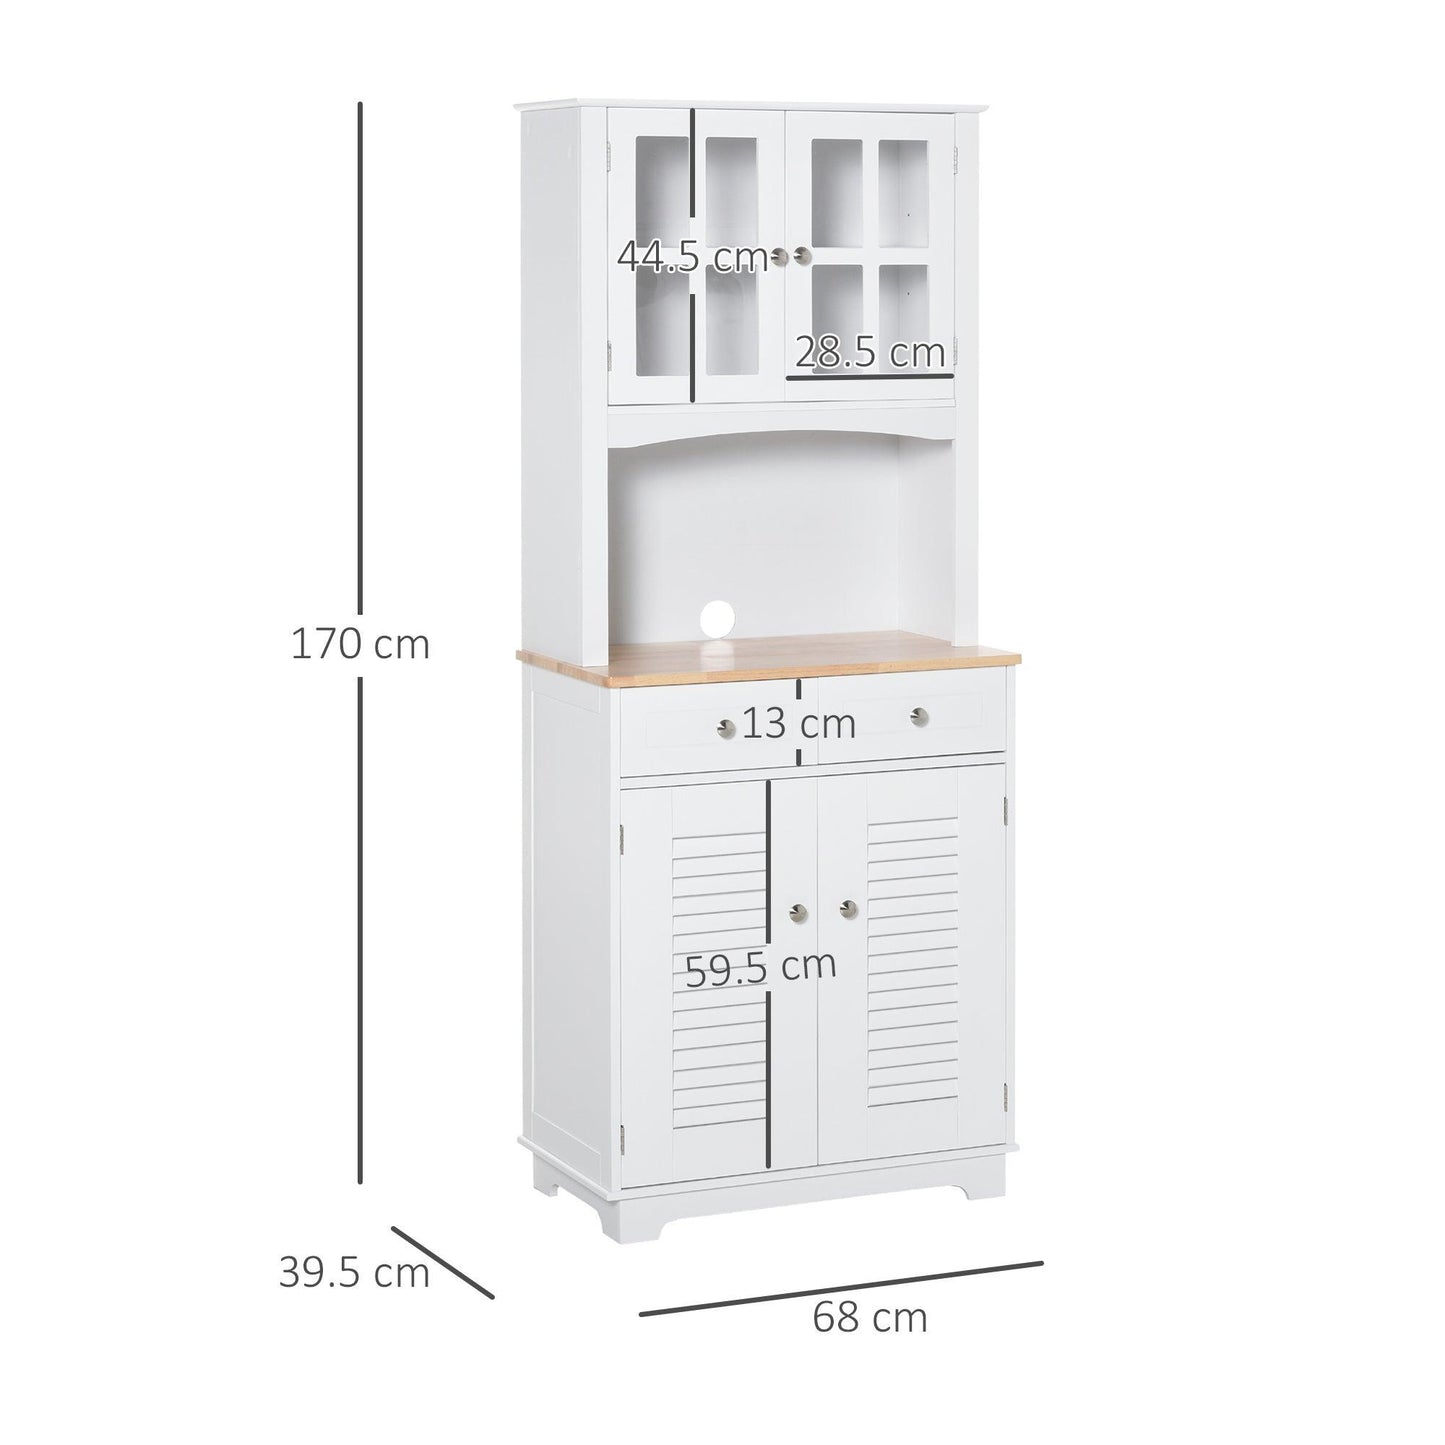 HOMCOM Modern White Kitchen Cupboard with Glass Doors and Drawers - ALL4U RETAILER LTD